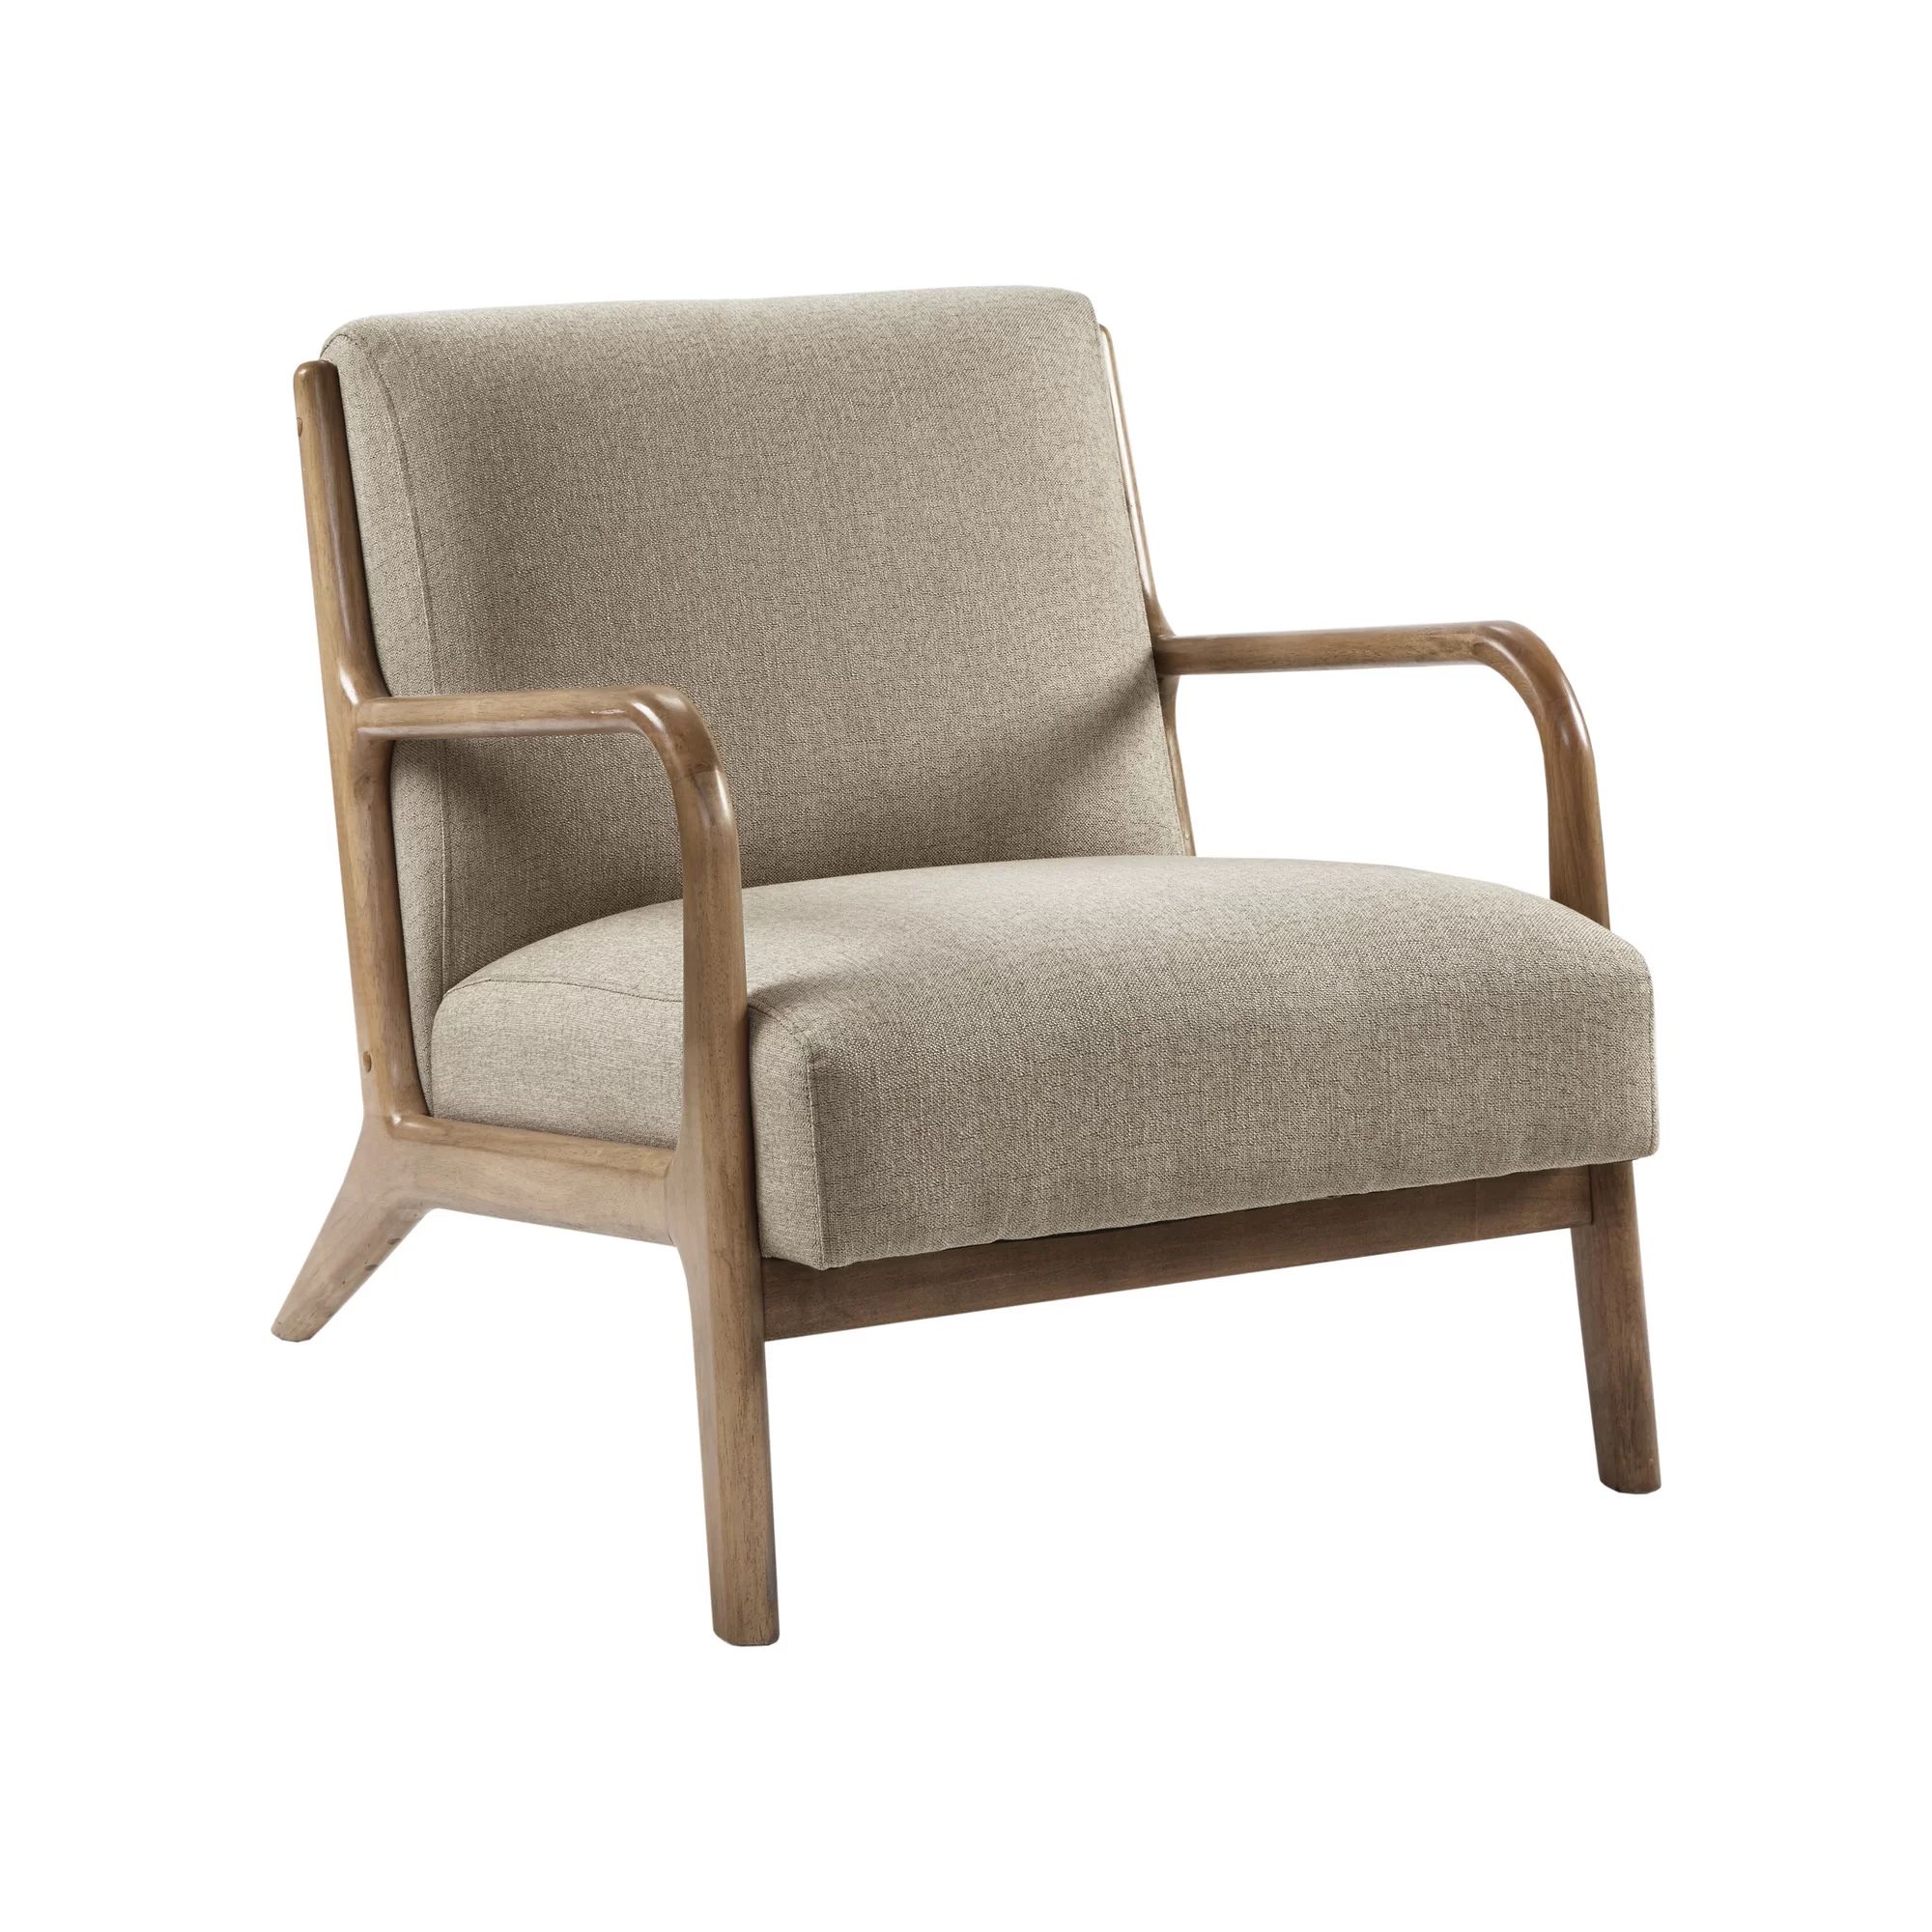 Ronaldo Upholstered Lounge Chair | Wayfair Professional